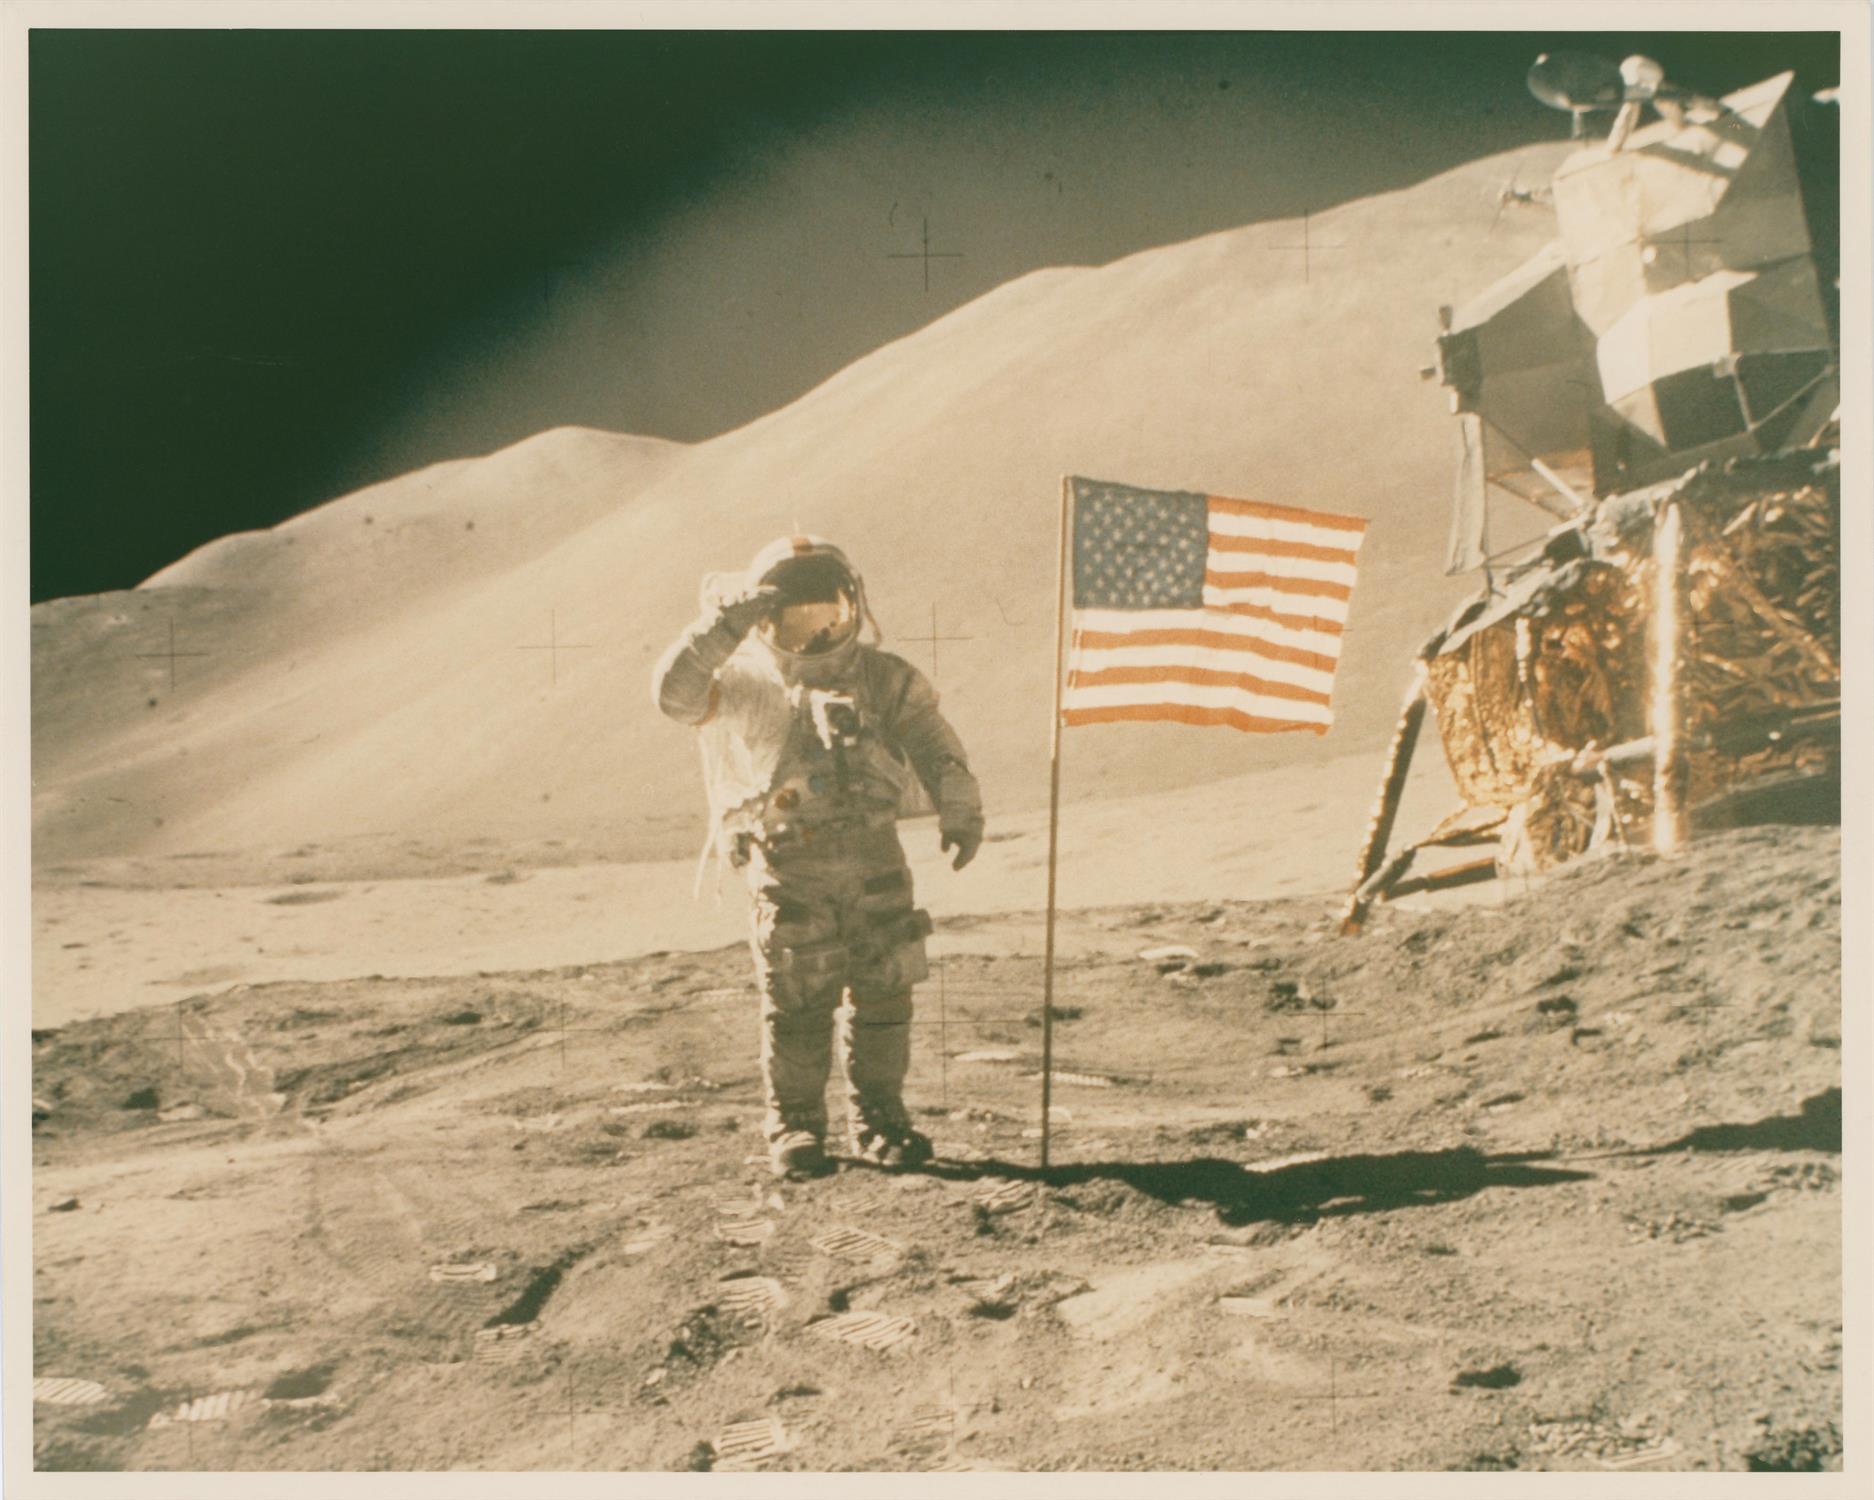 David Scott saluting the American flag, Apollo 15, July-August 1971, EVA 3